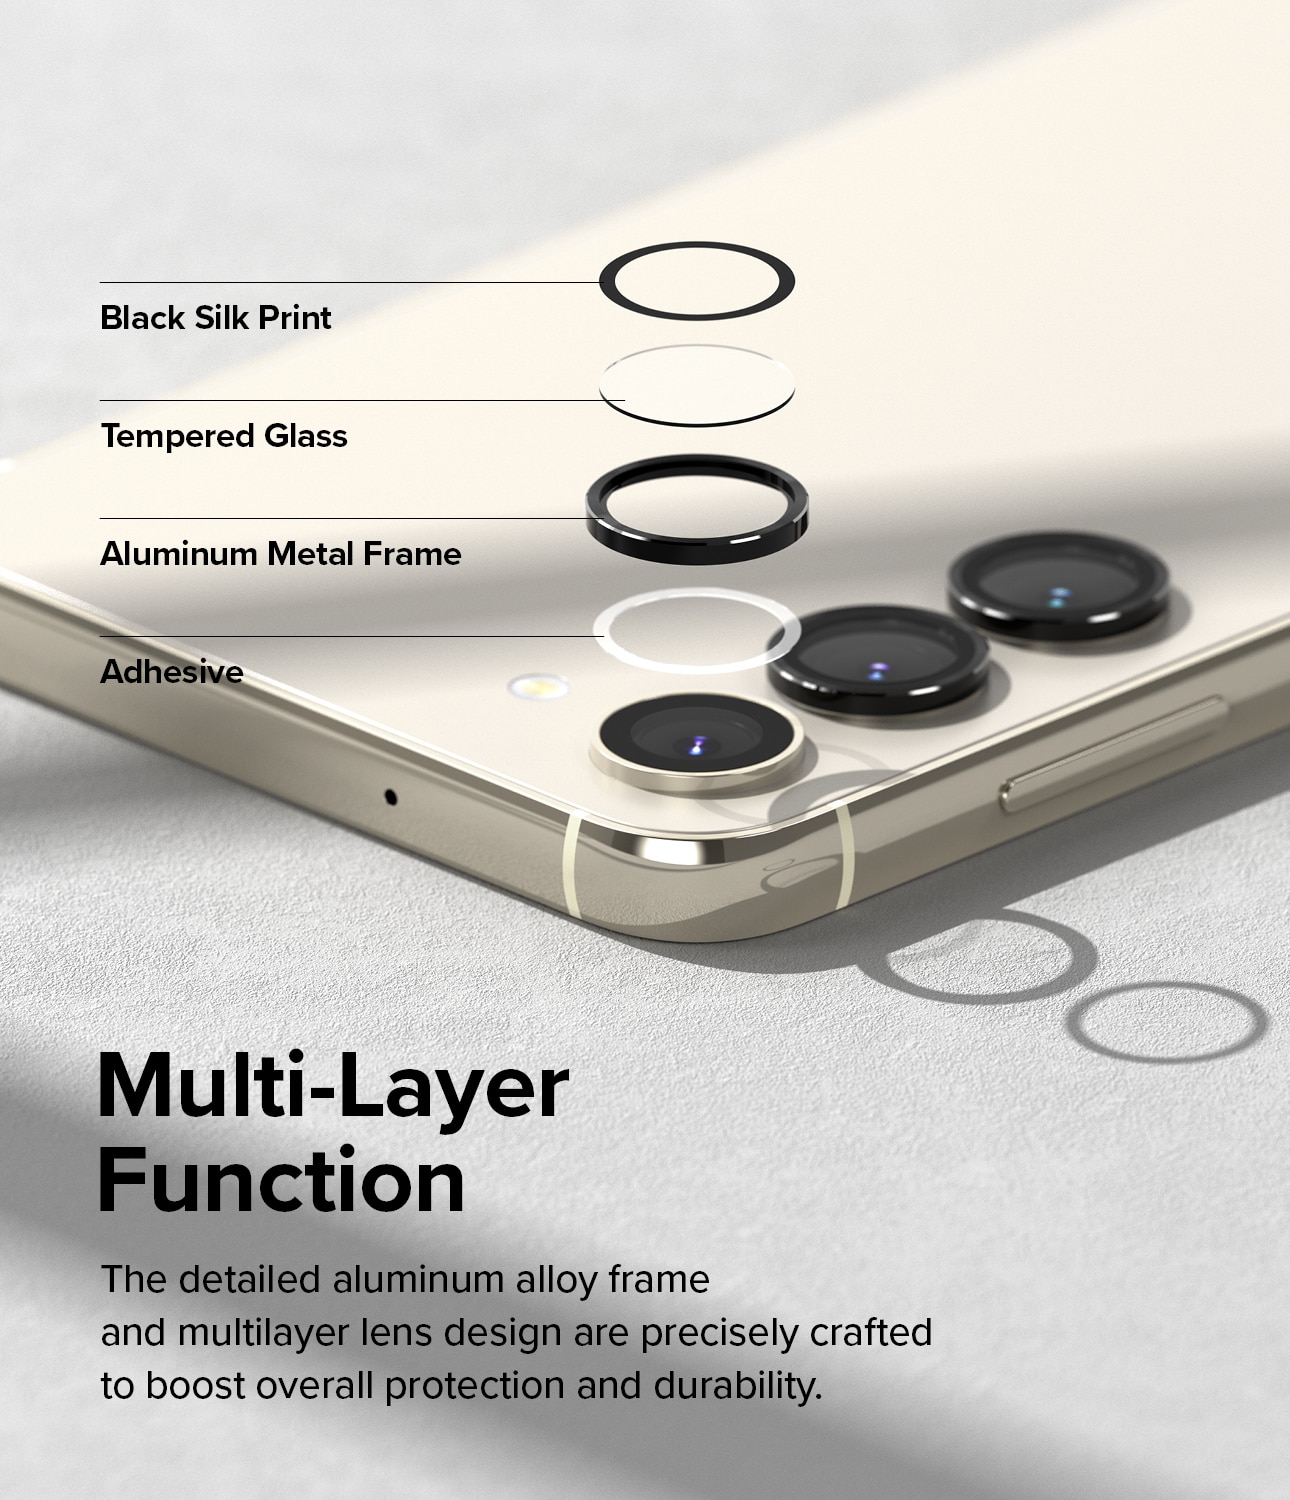 Camera Lens Frame Glass Samsung Galaxy S23/S23 Plus Black